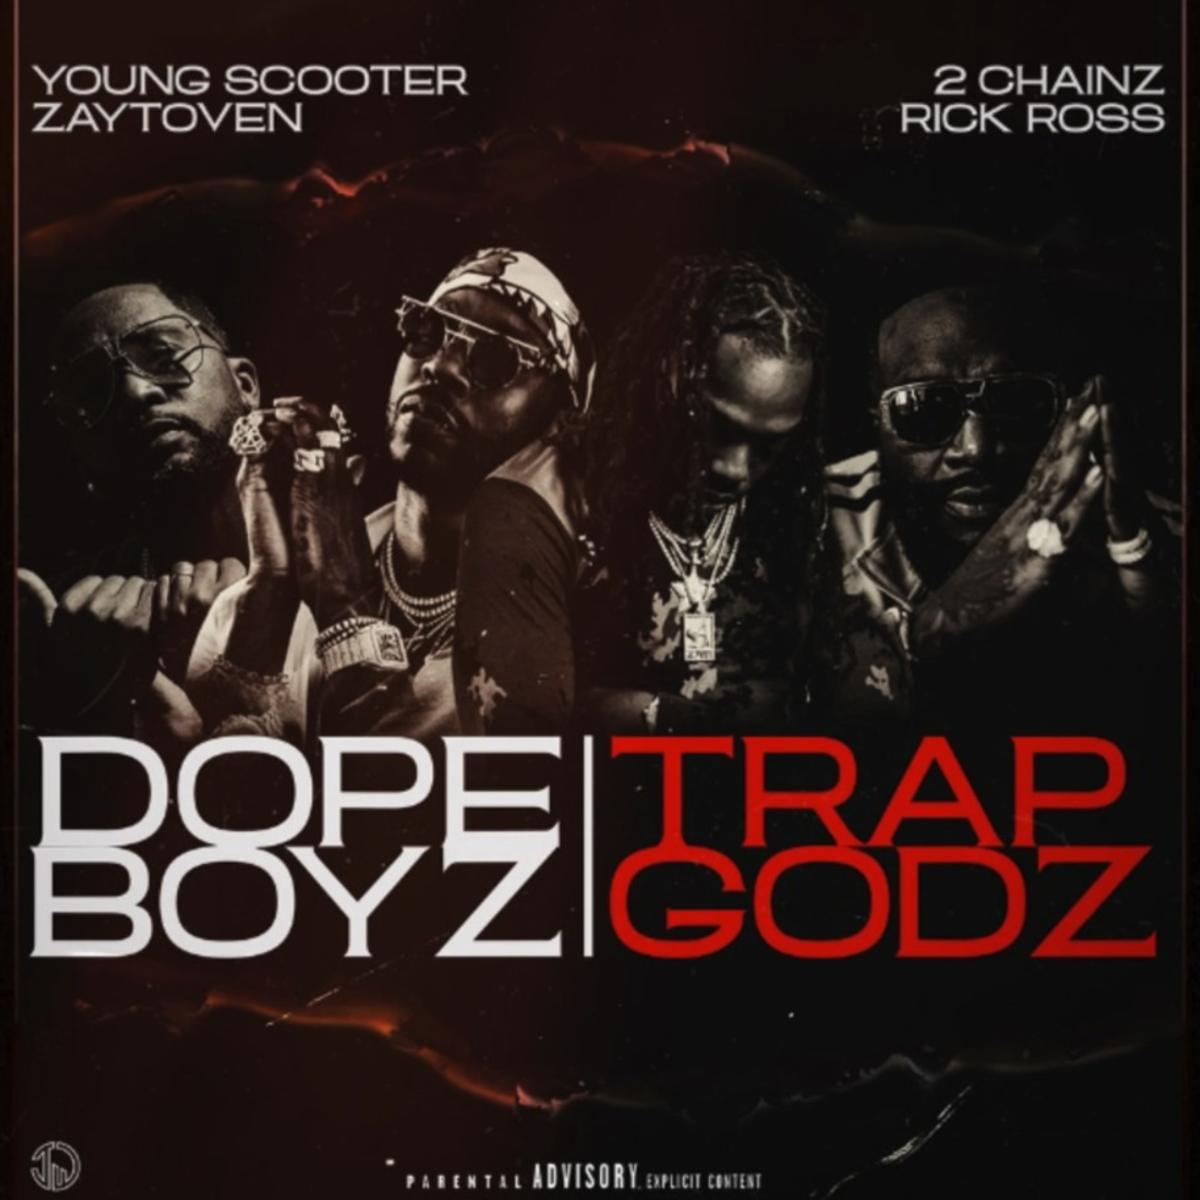 Young Scooter & Zaytoven Feat. 2 Chainz & Rick Ross – “Dope Boyz & Trap Godz” [Audio]